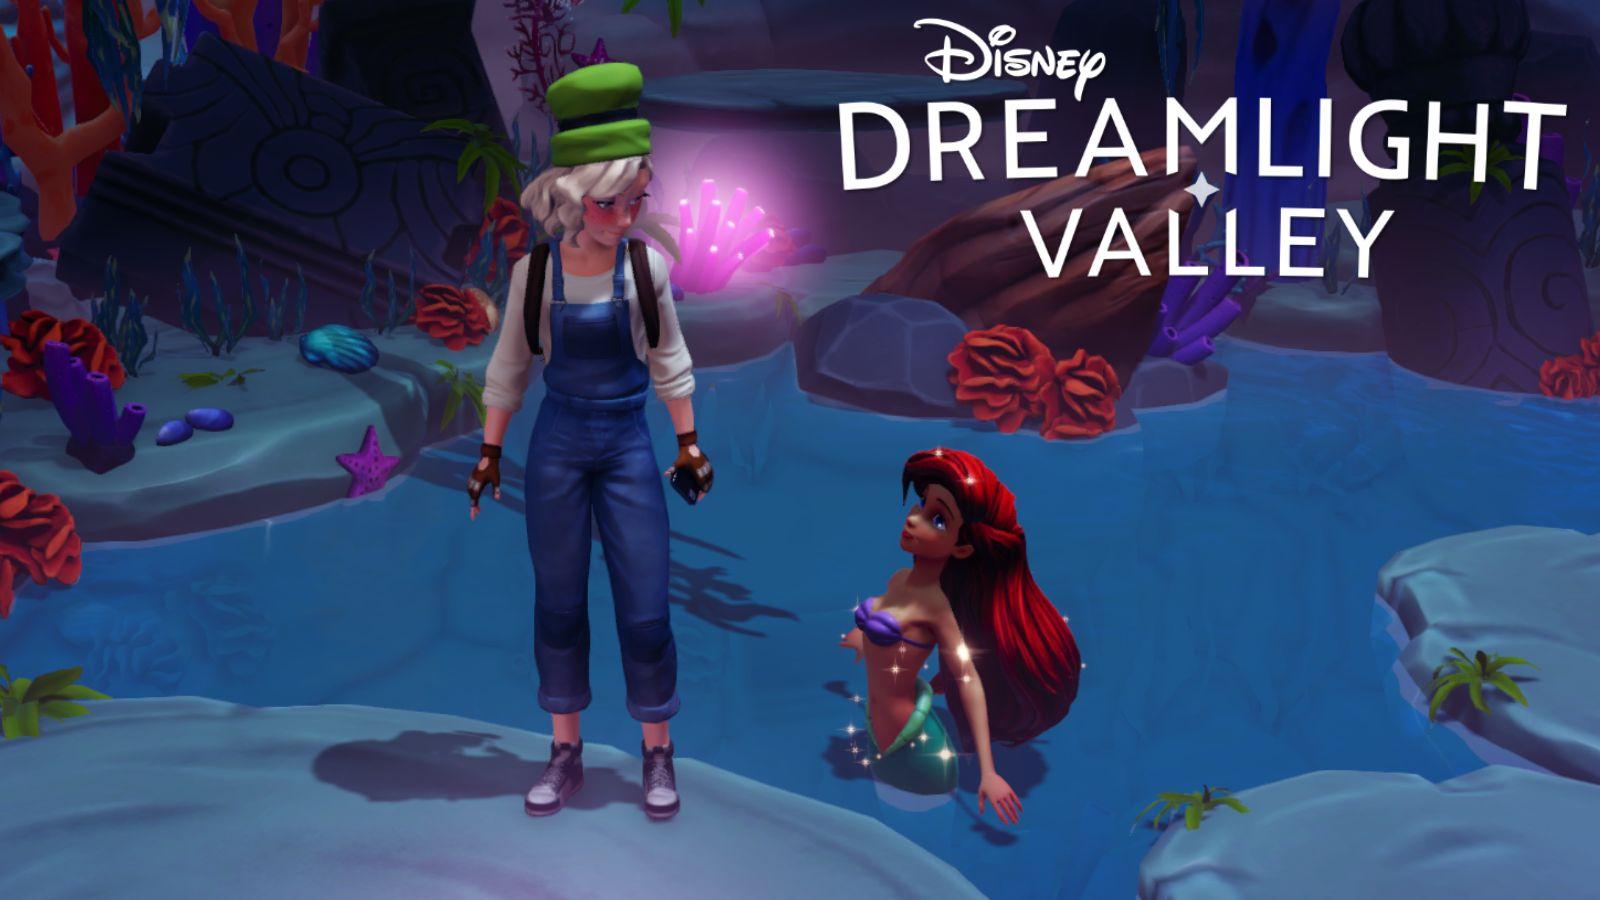 Speaking to Ariel in Disney Dreamlight Valley